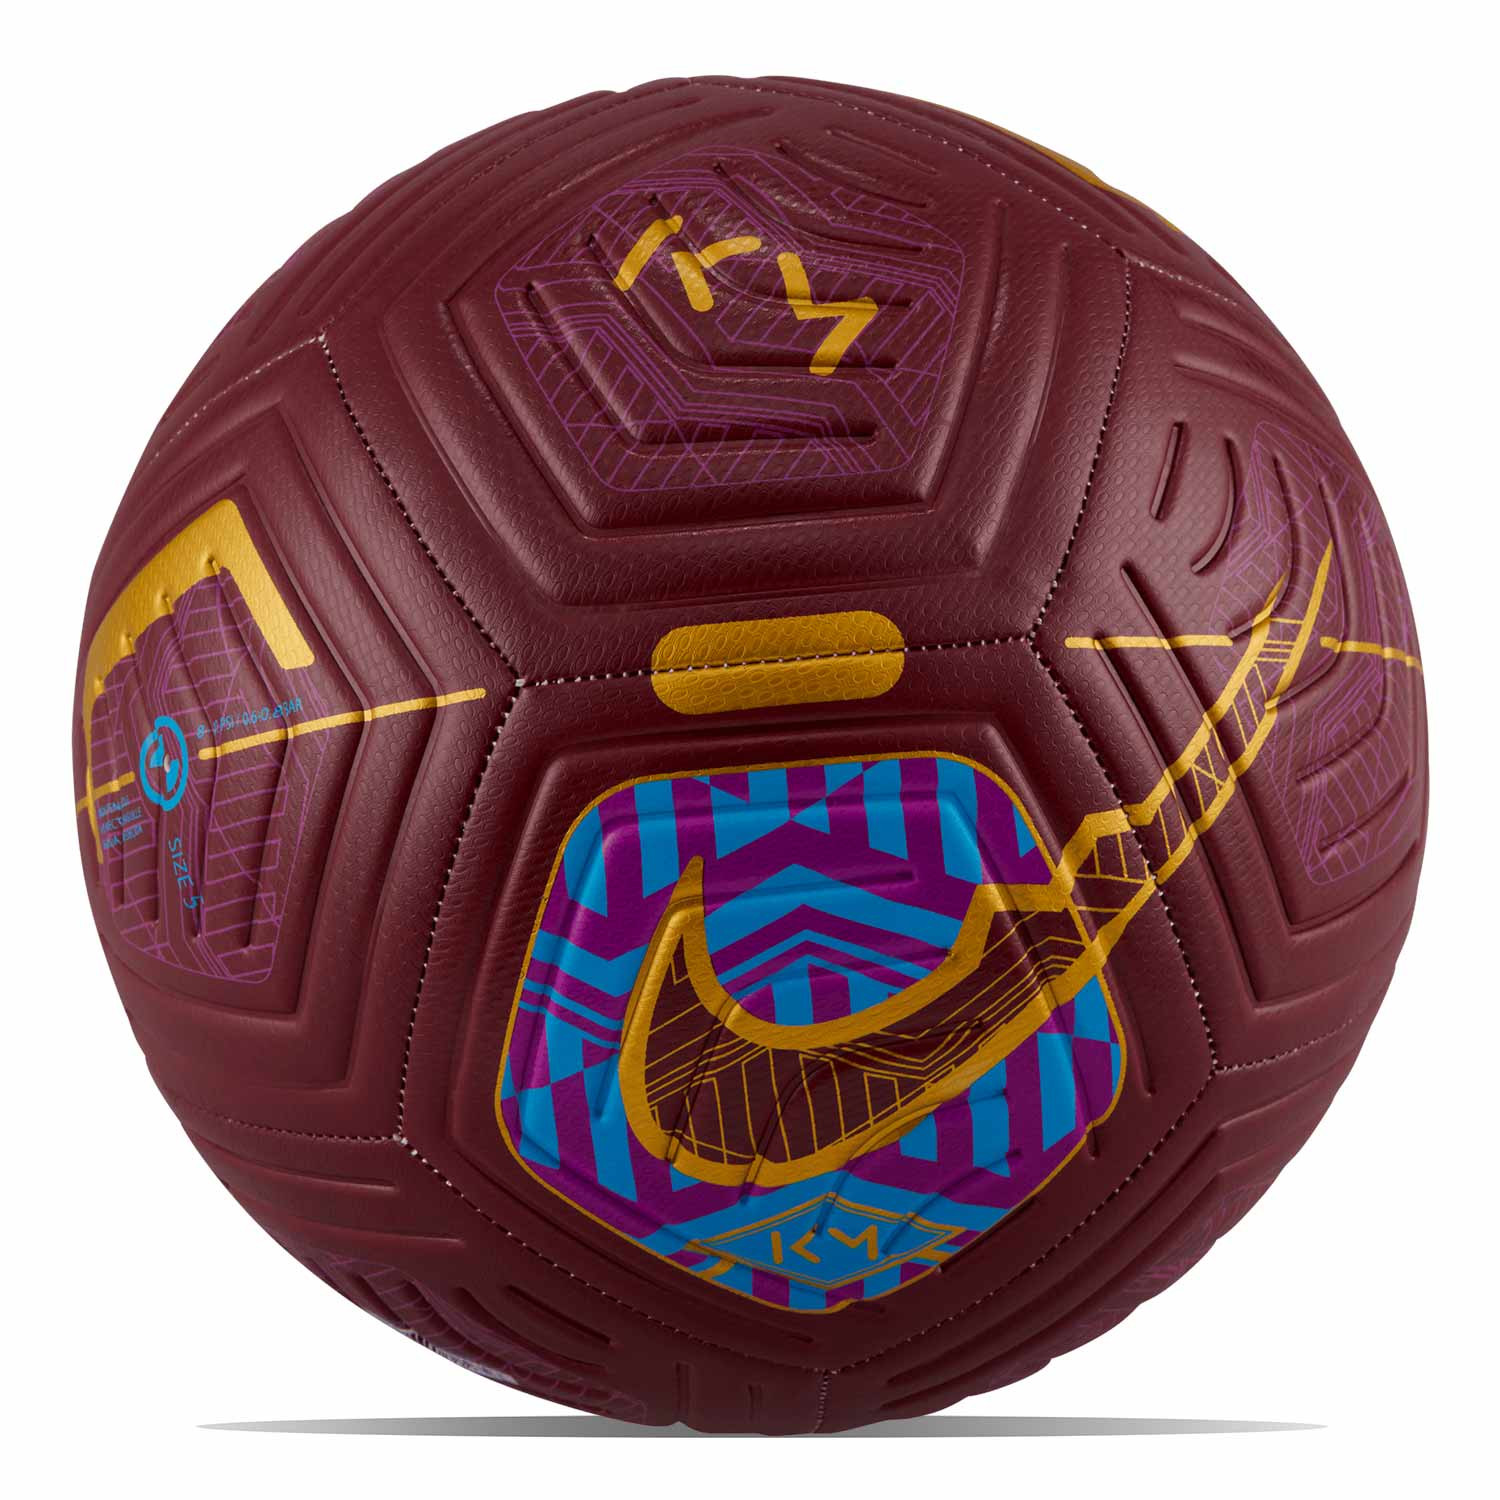 Qué tamaño de balón de fútbol necesito?